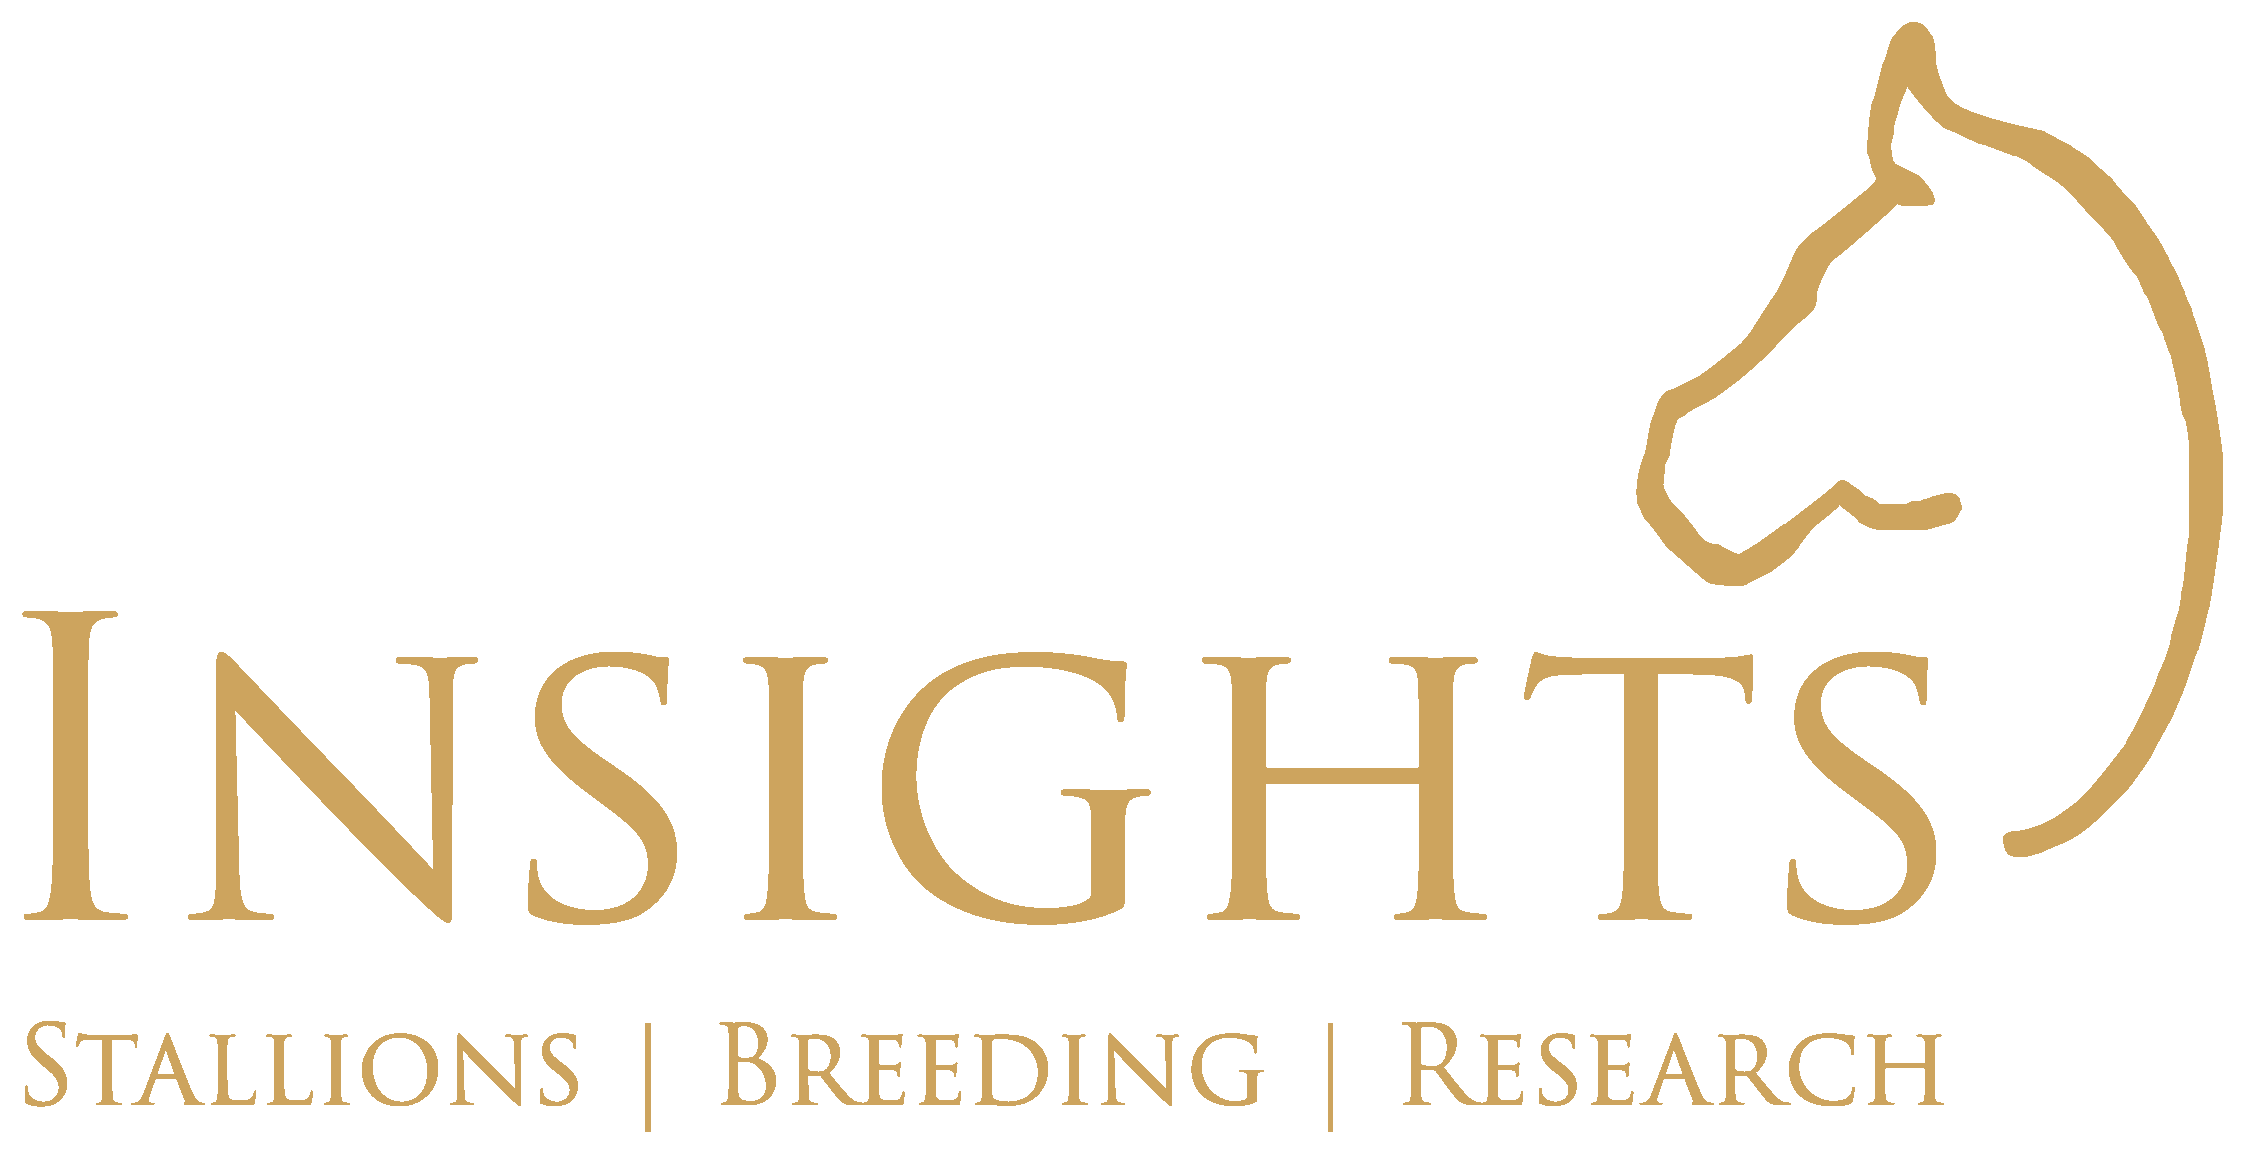 Insights logo GOLD-01.png